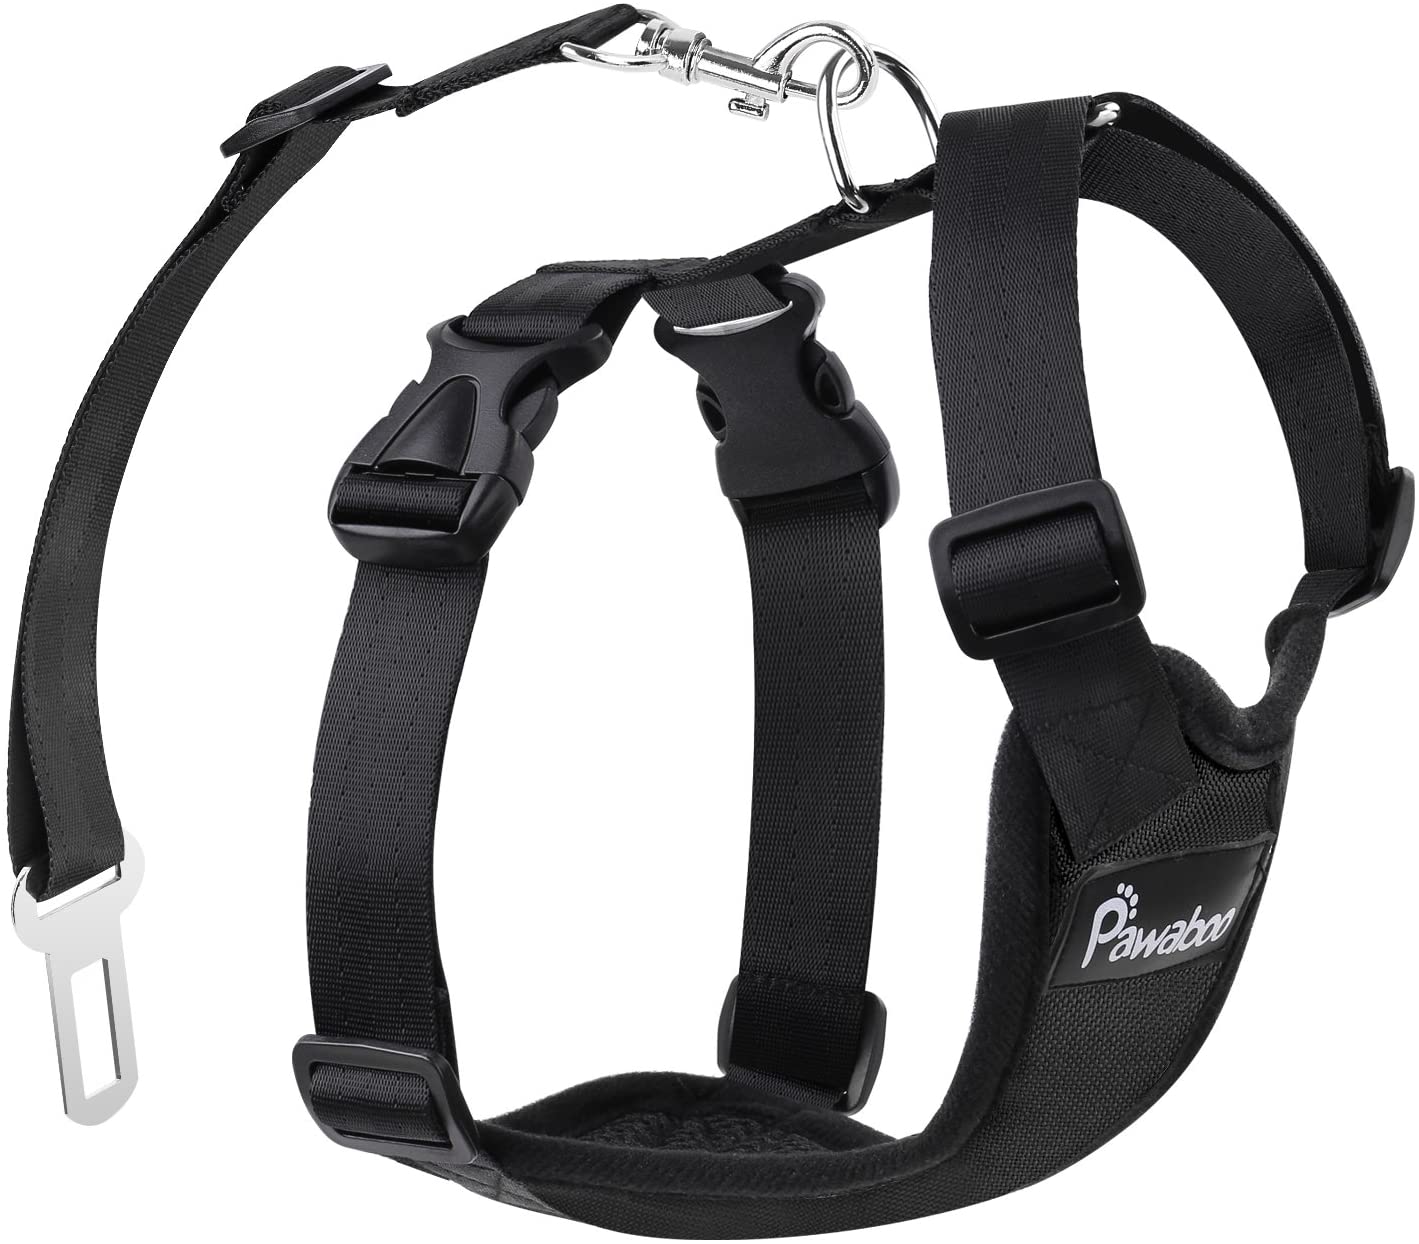  Pawaboo Cinturón de Arnés de Chaleco de Seguridad para Perros, Mascotas Arnés Ajustable para Perros de 33 lb-55 LB, Negro 